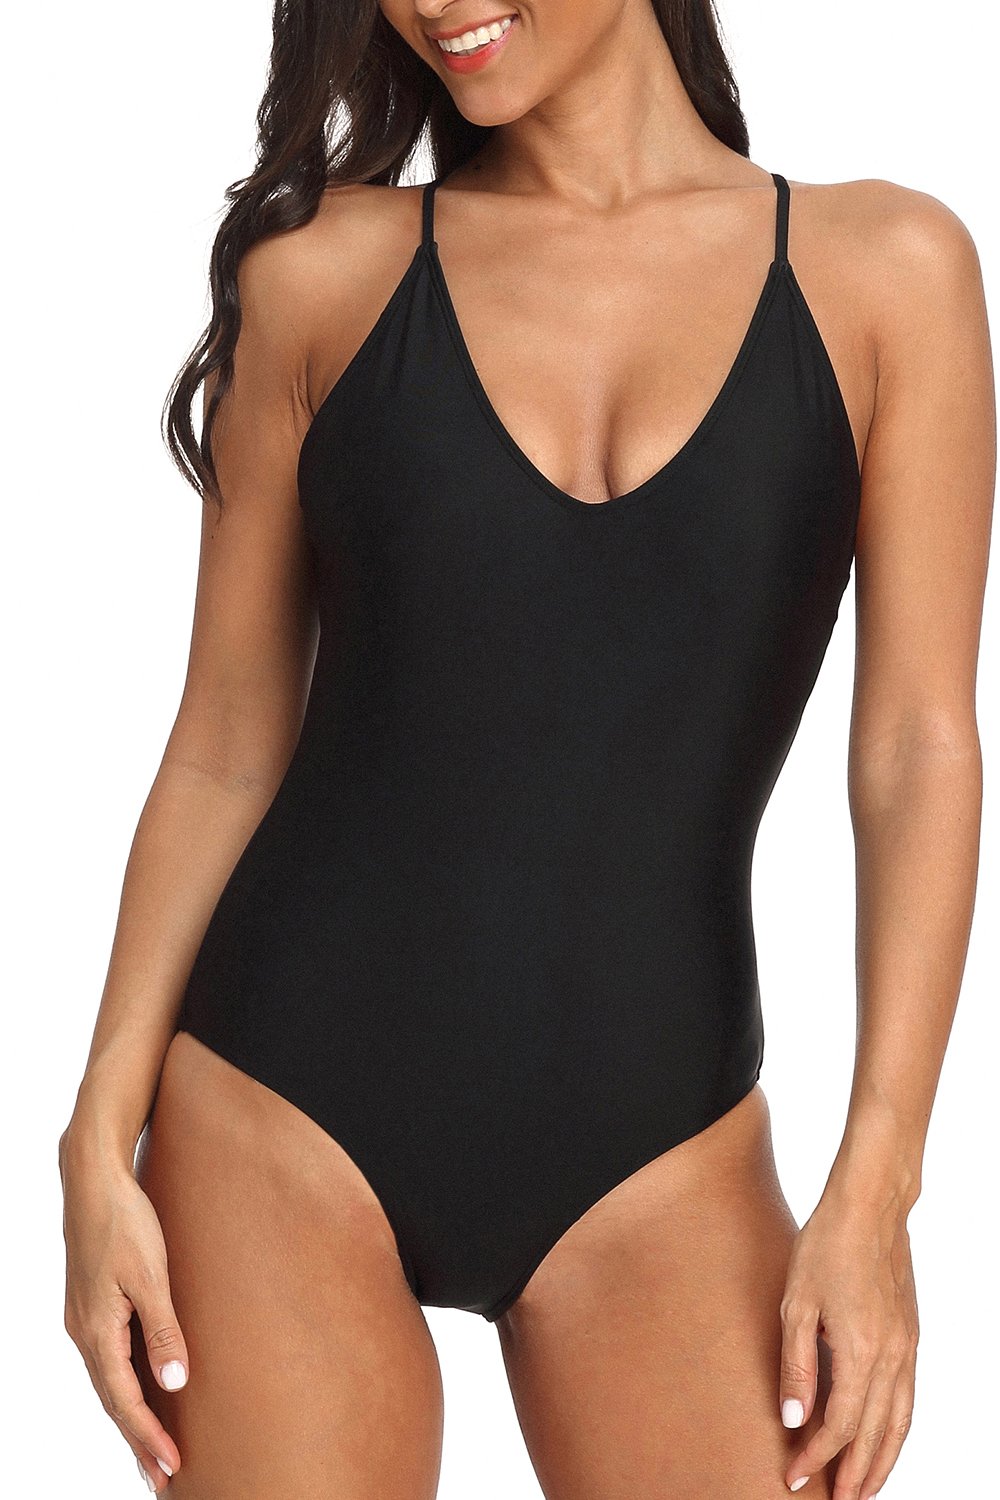 One Piece Swimsuit for Women Sexy V-Neck Bathing Suit Cute Swimwear